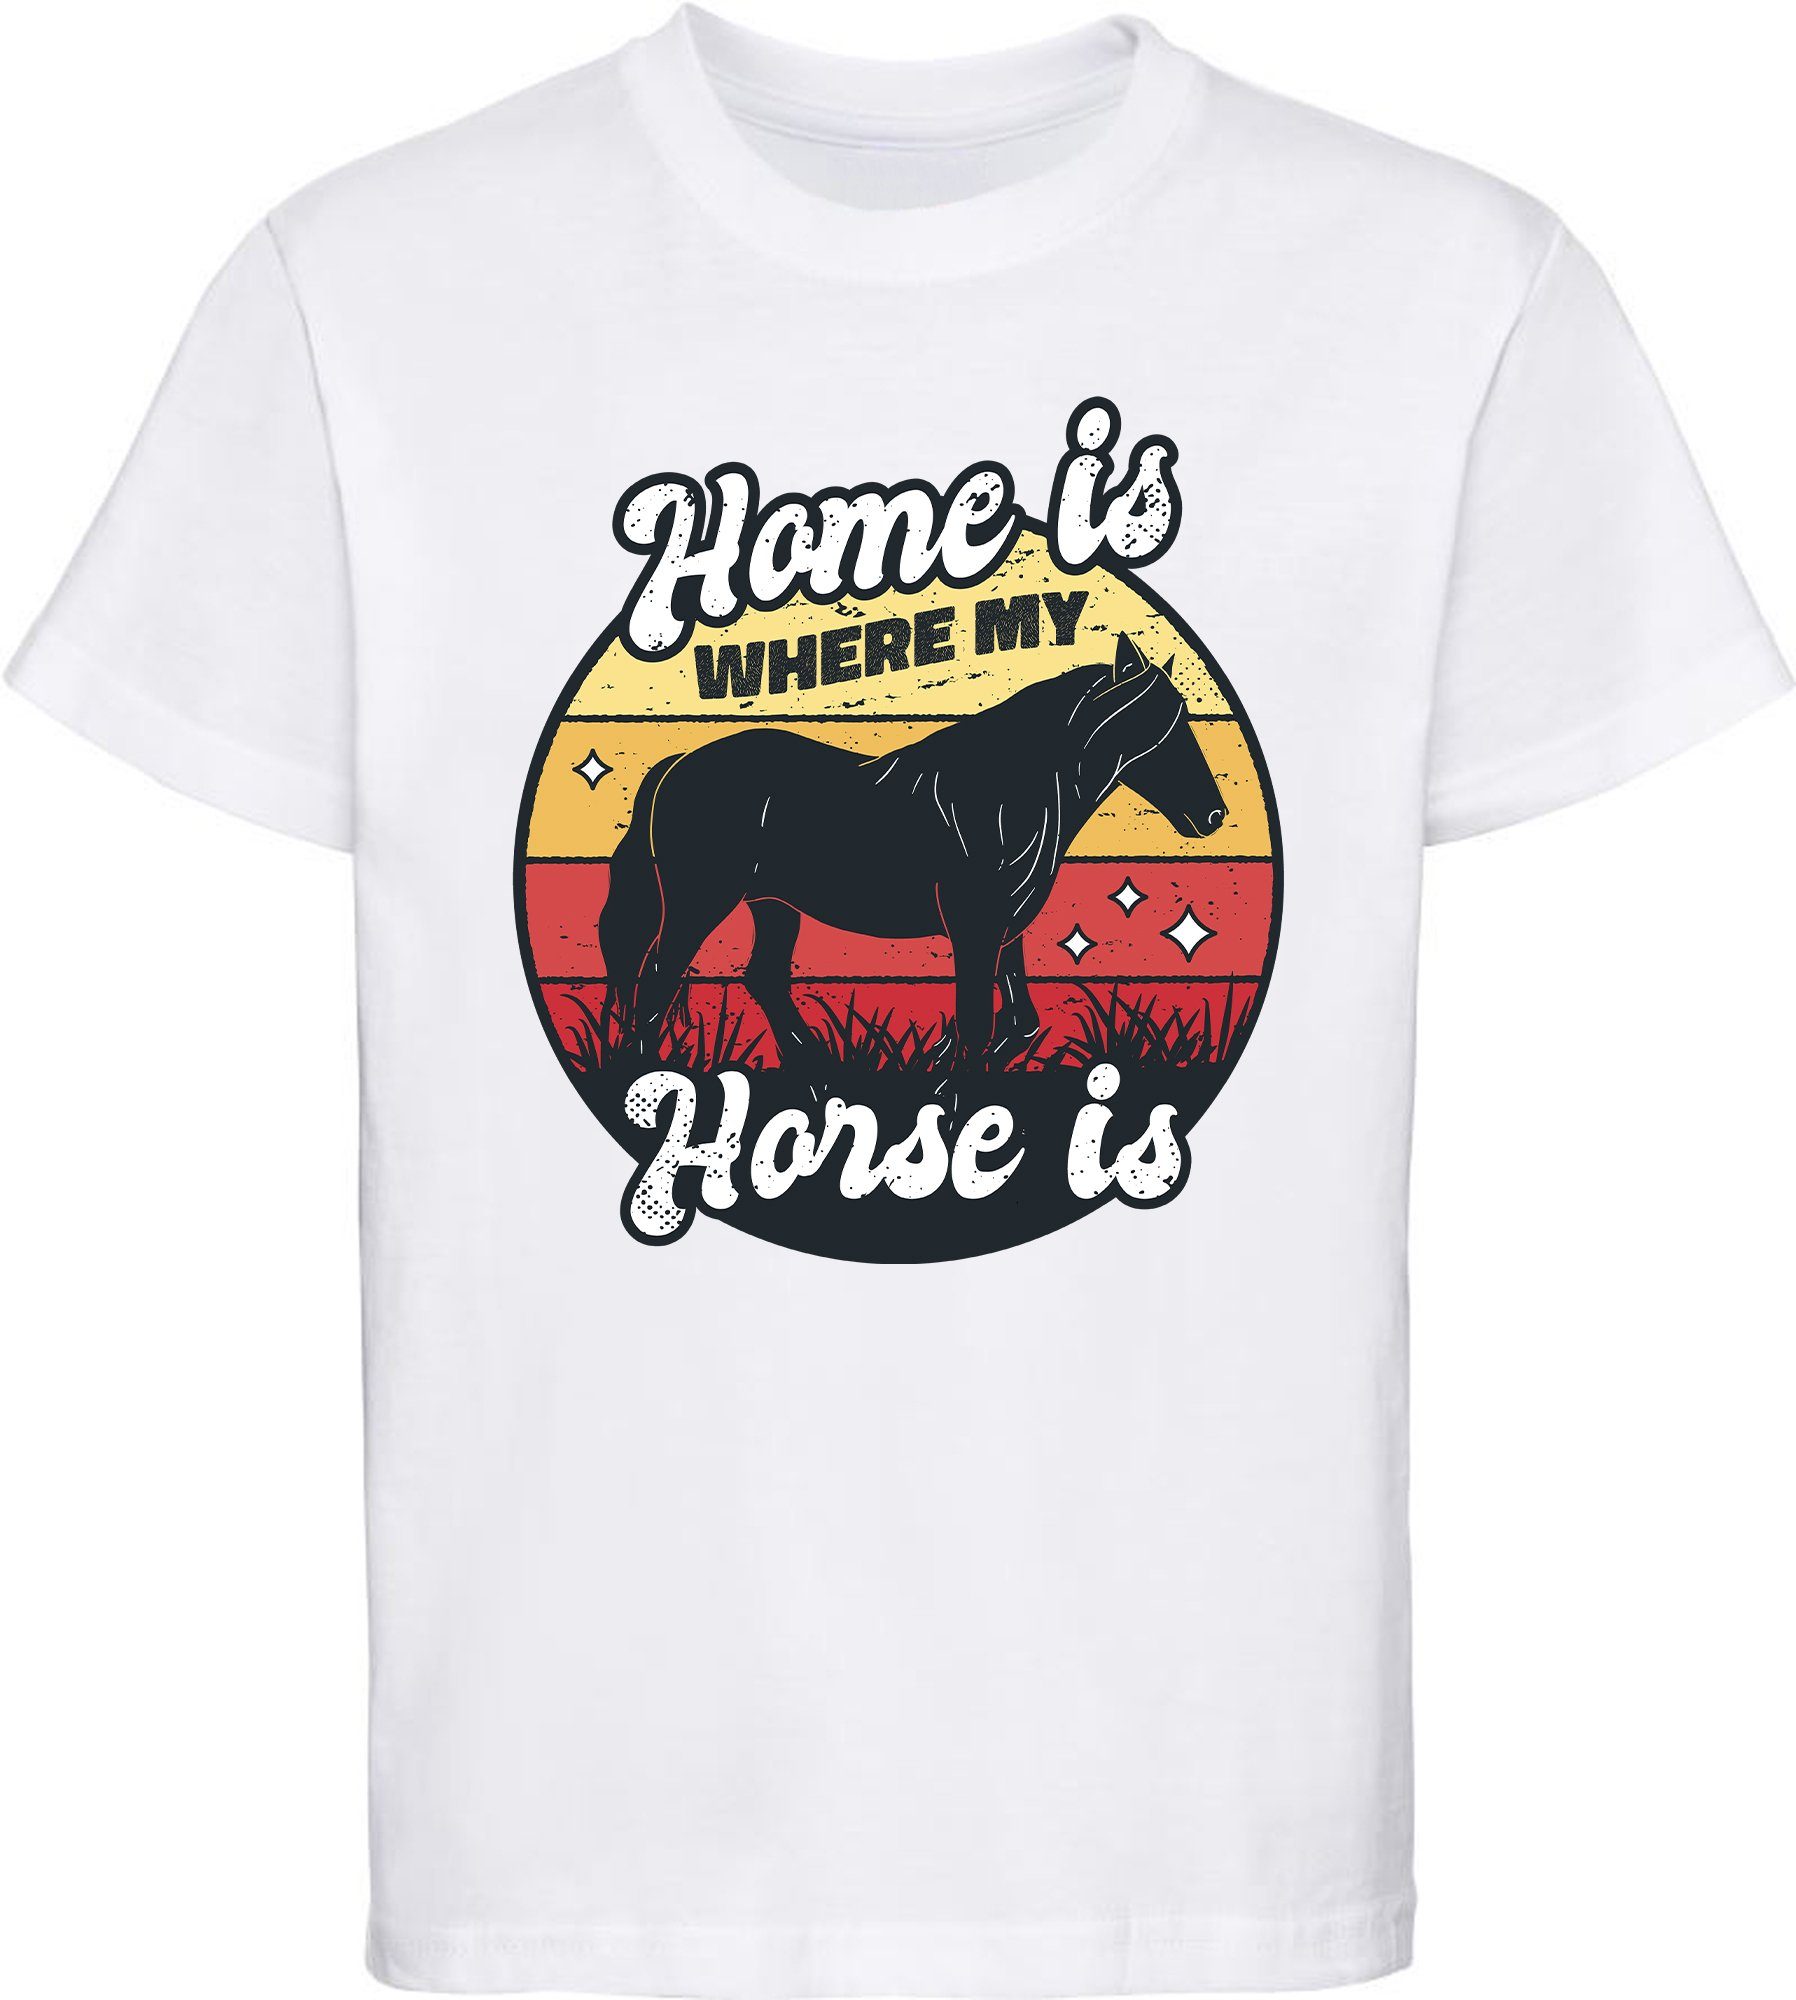 T-Shirt Baumwollshirt where Mädchen horse weiss Aufdruck, MyDesign24 is is mit - Print-Shirt Home i156 bedrucktes my